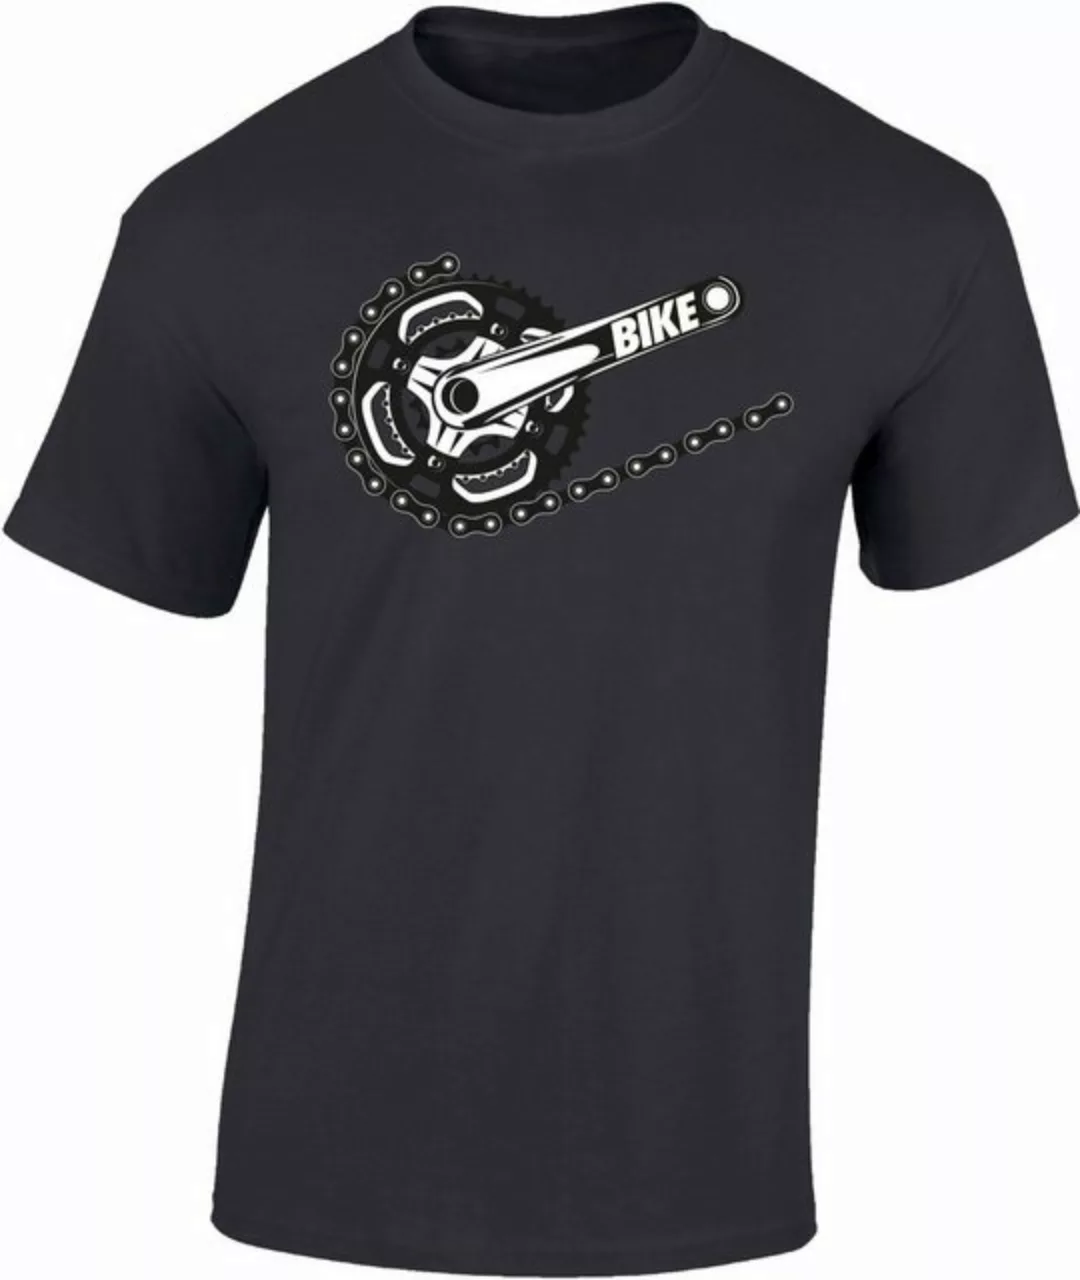 Baddery Print-Shirt Fahrrad T-Shirt: "Bike" - Mountainbike Shirt, hochwerti günstig online kaufen